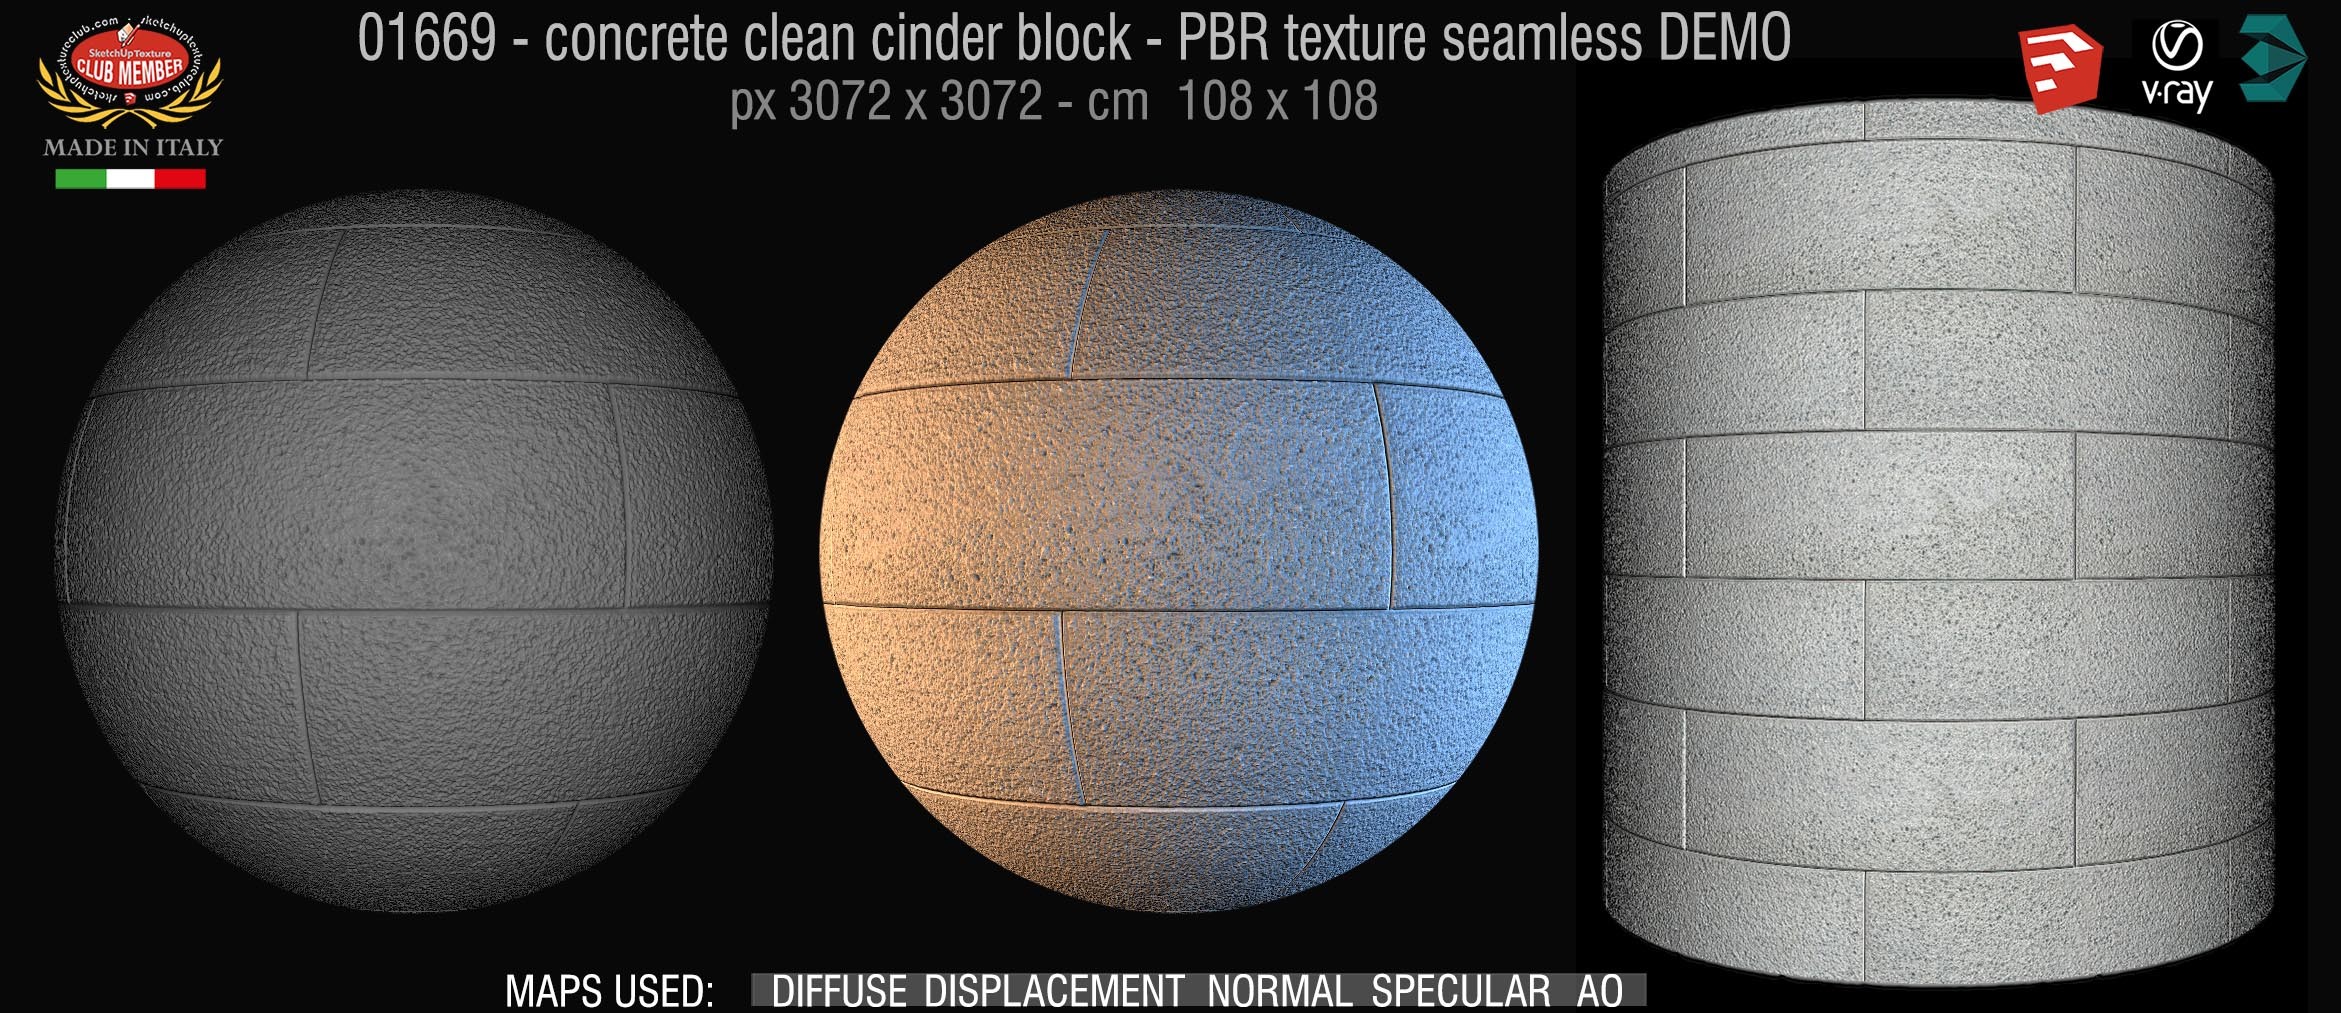 01669 concrete clean cinder block PBR texture seamless DEMO